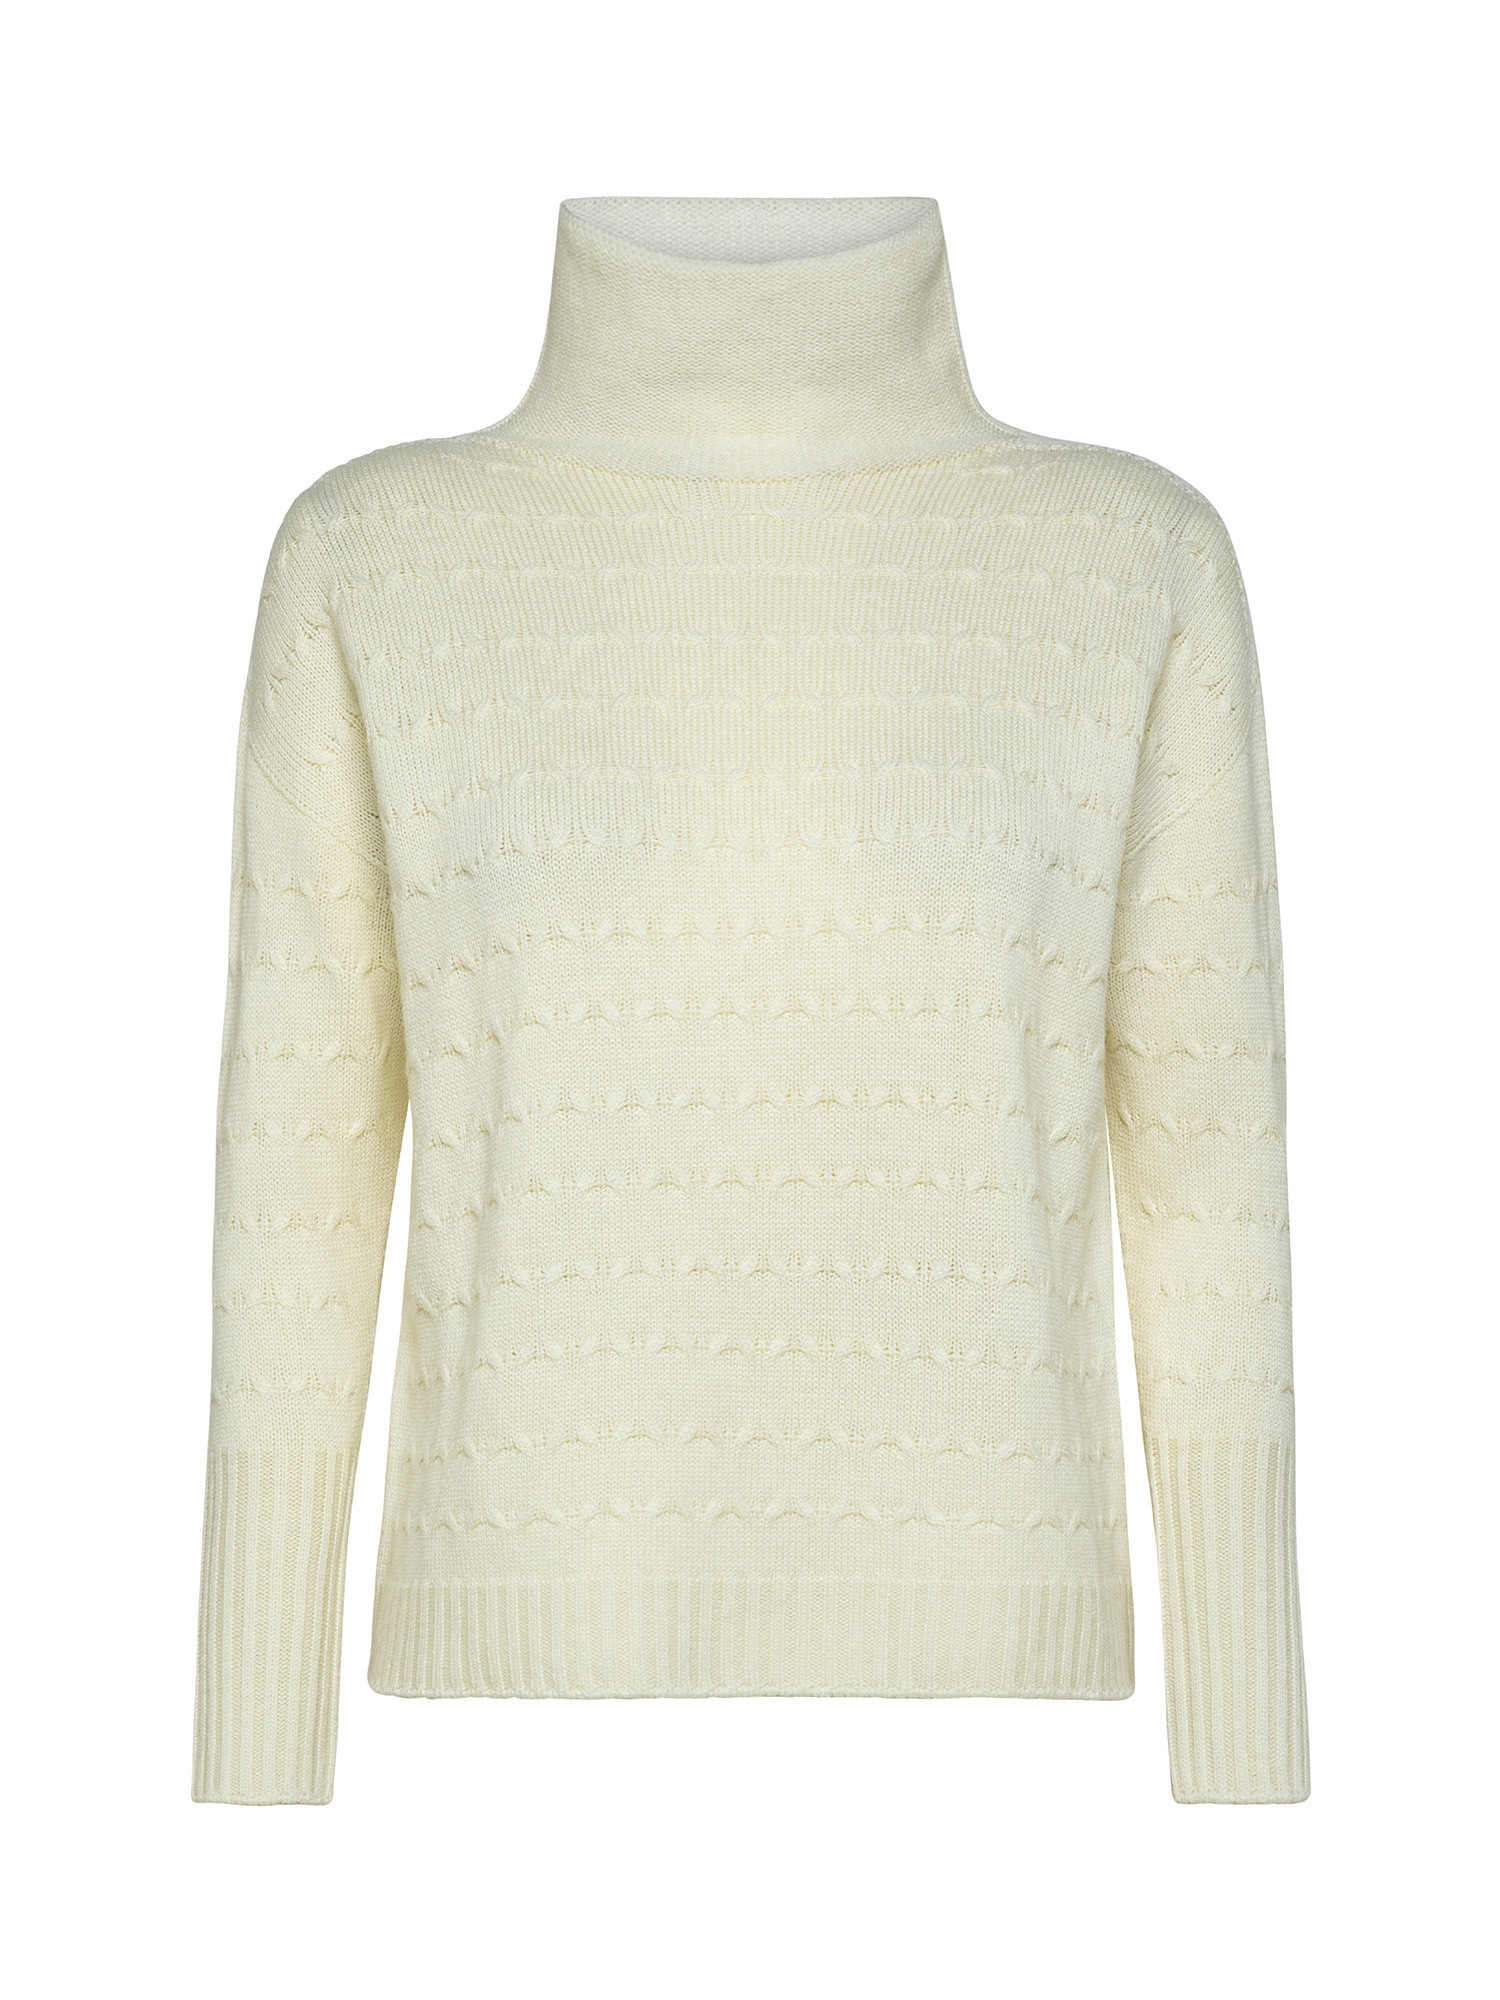 K Collection - Knitted turtleneck pullover, Ecru, large image number 0